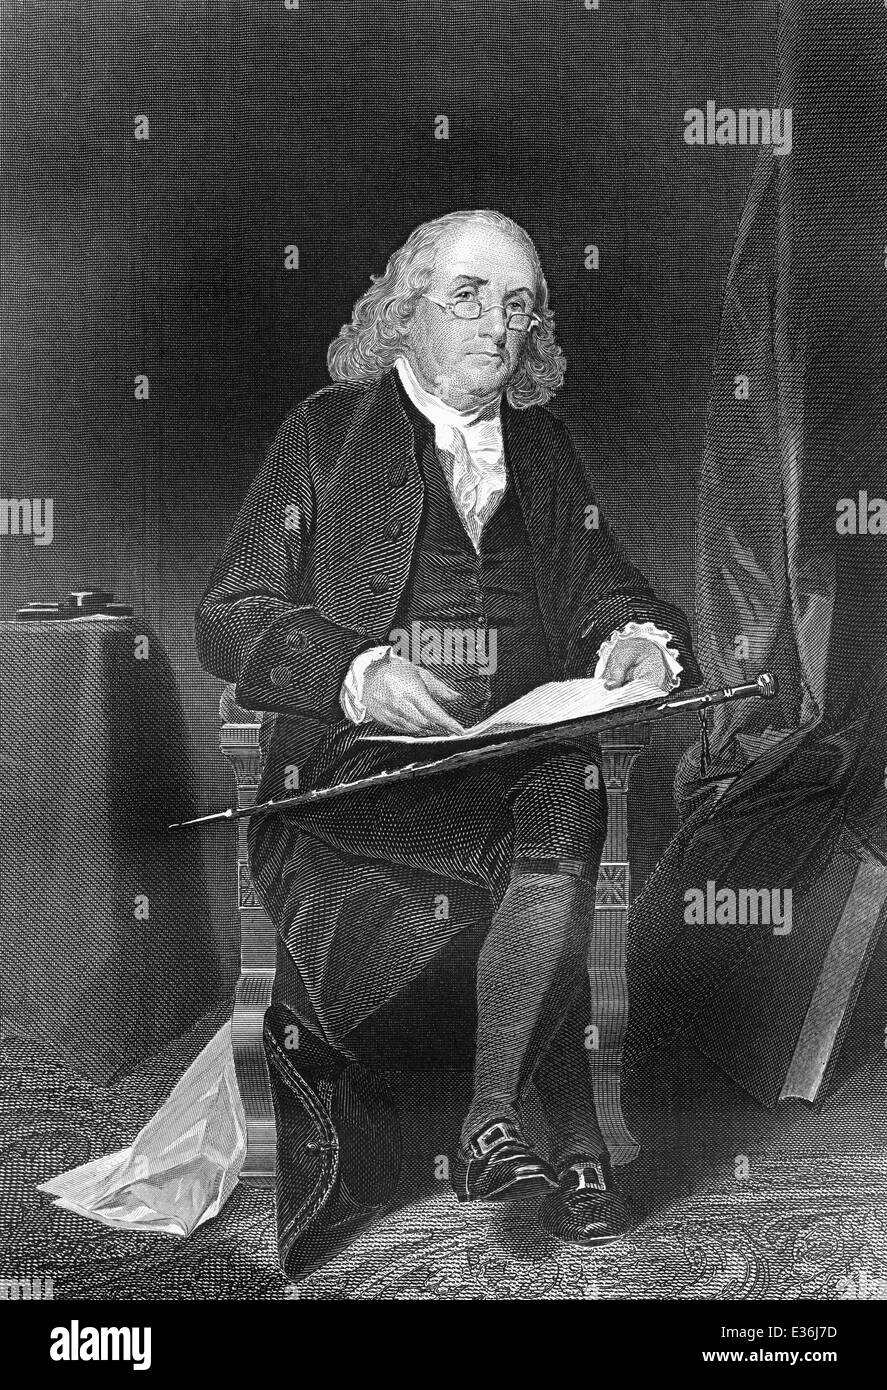 portrait of Benjamin Franklin, 1706 - 1790, a North American printer, publisher, writer, scientist, inventor and statesman, Stock Photo